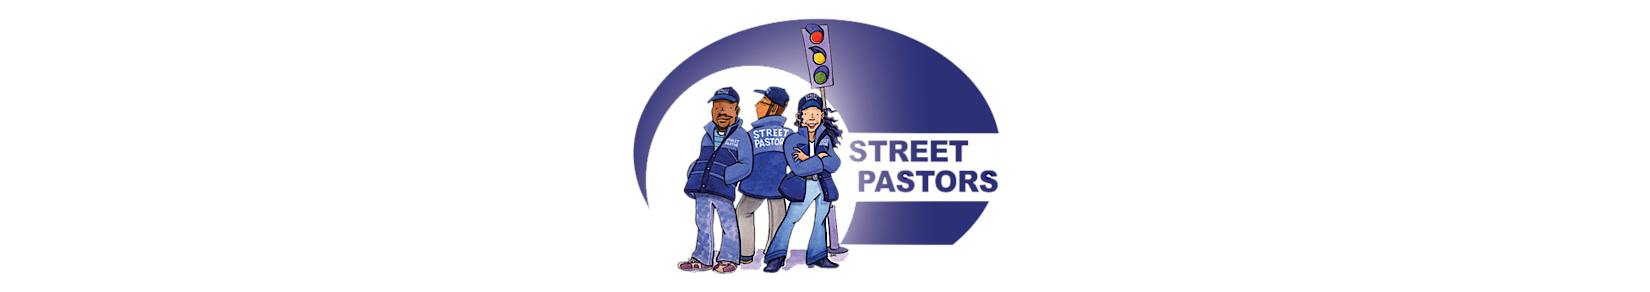 Street Pastors logo